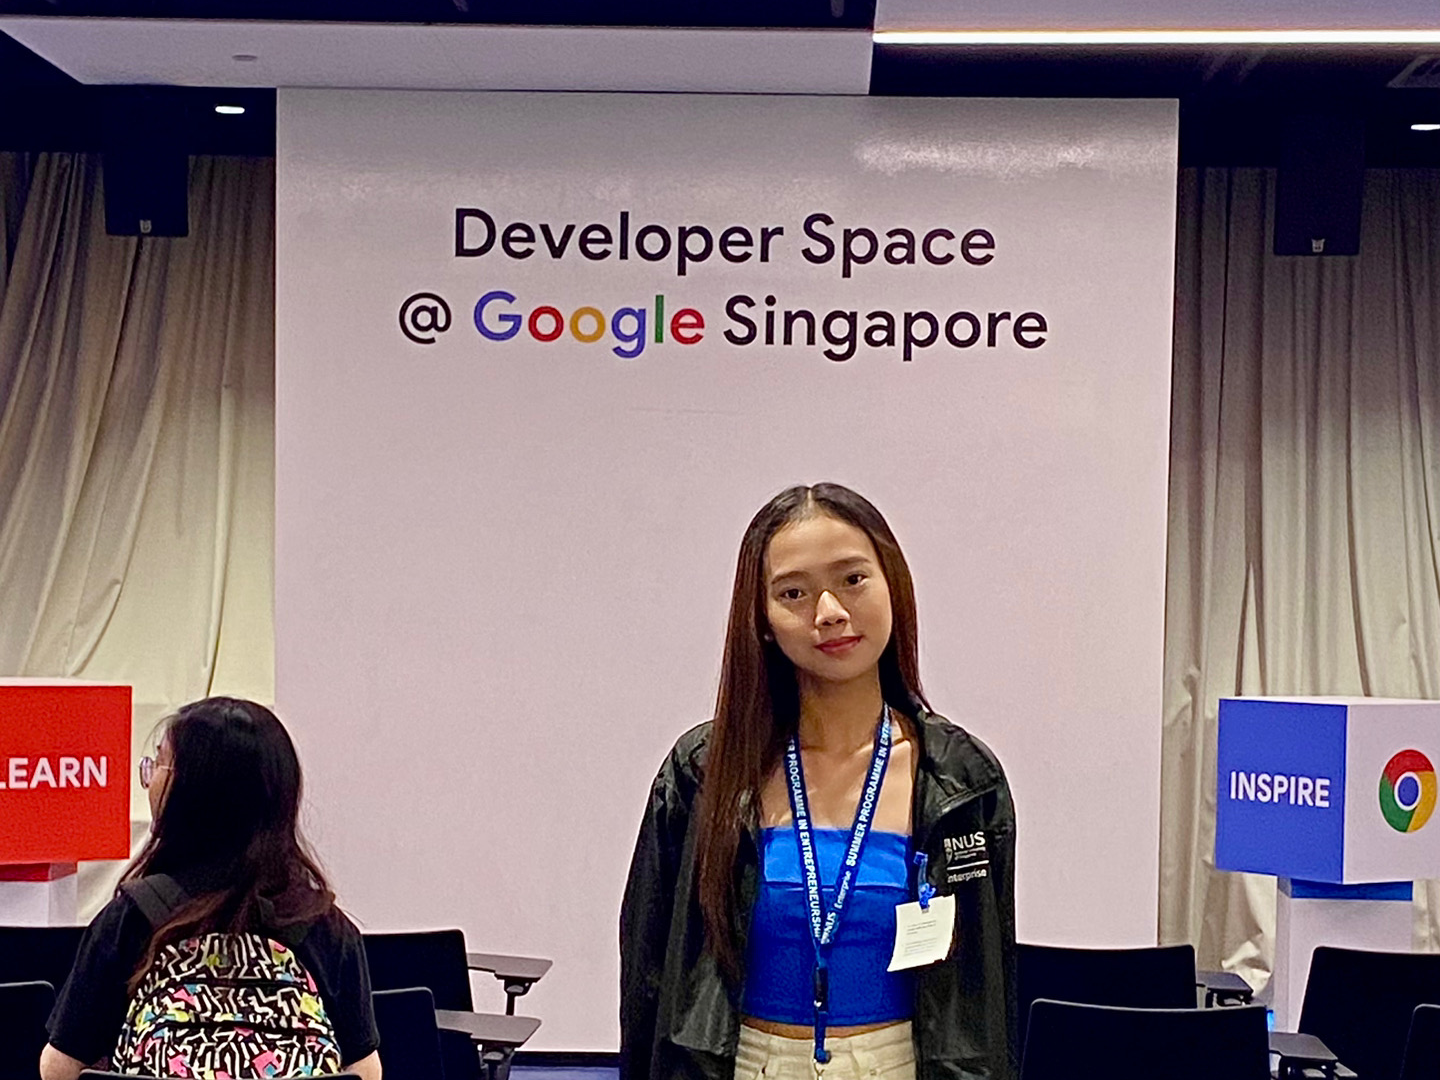 At Google Singapore